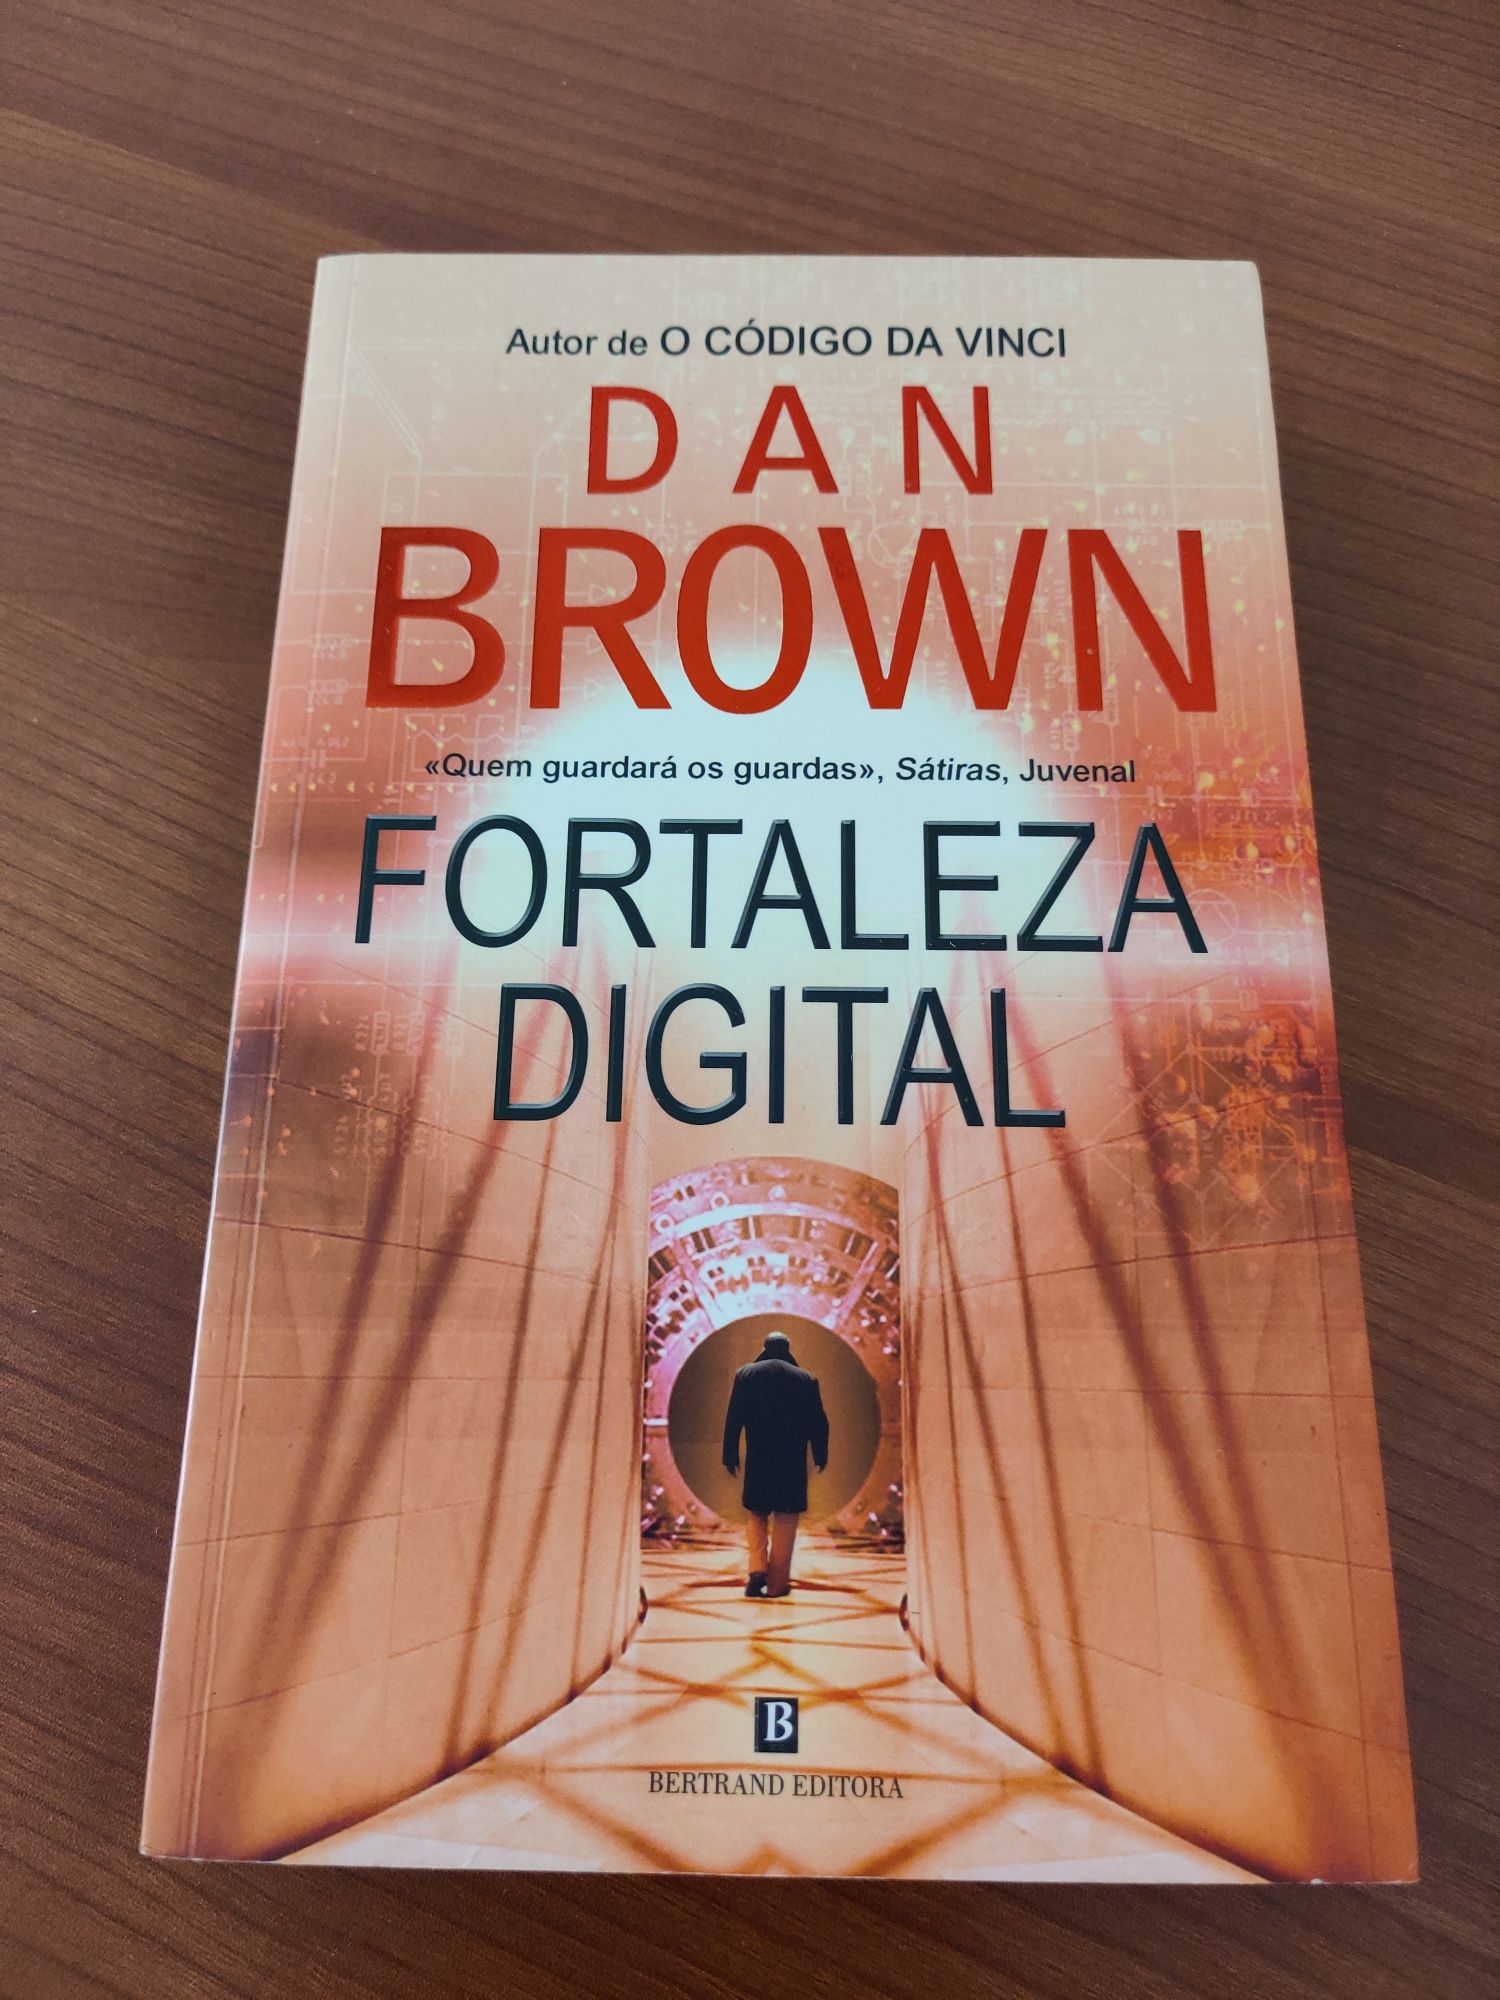 Livro "Fortaleza digital", de Dan Brown